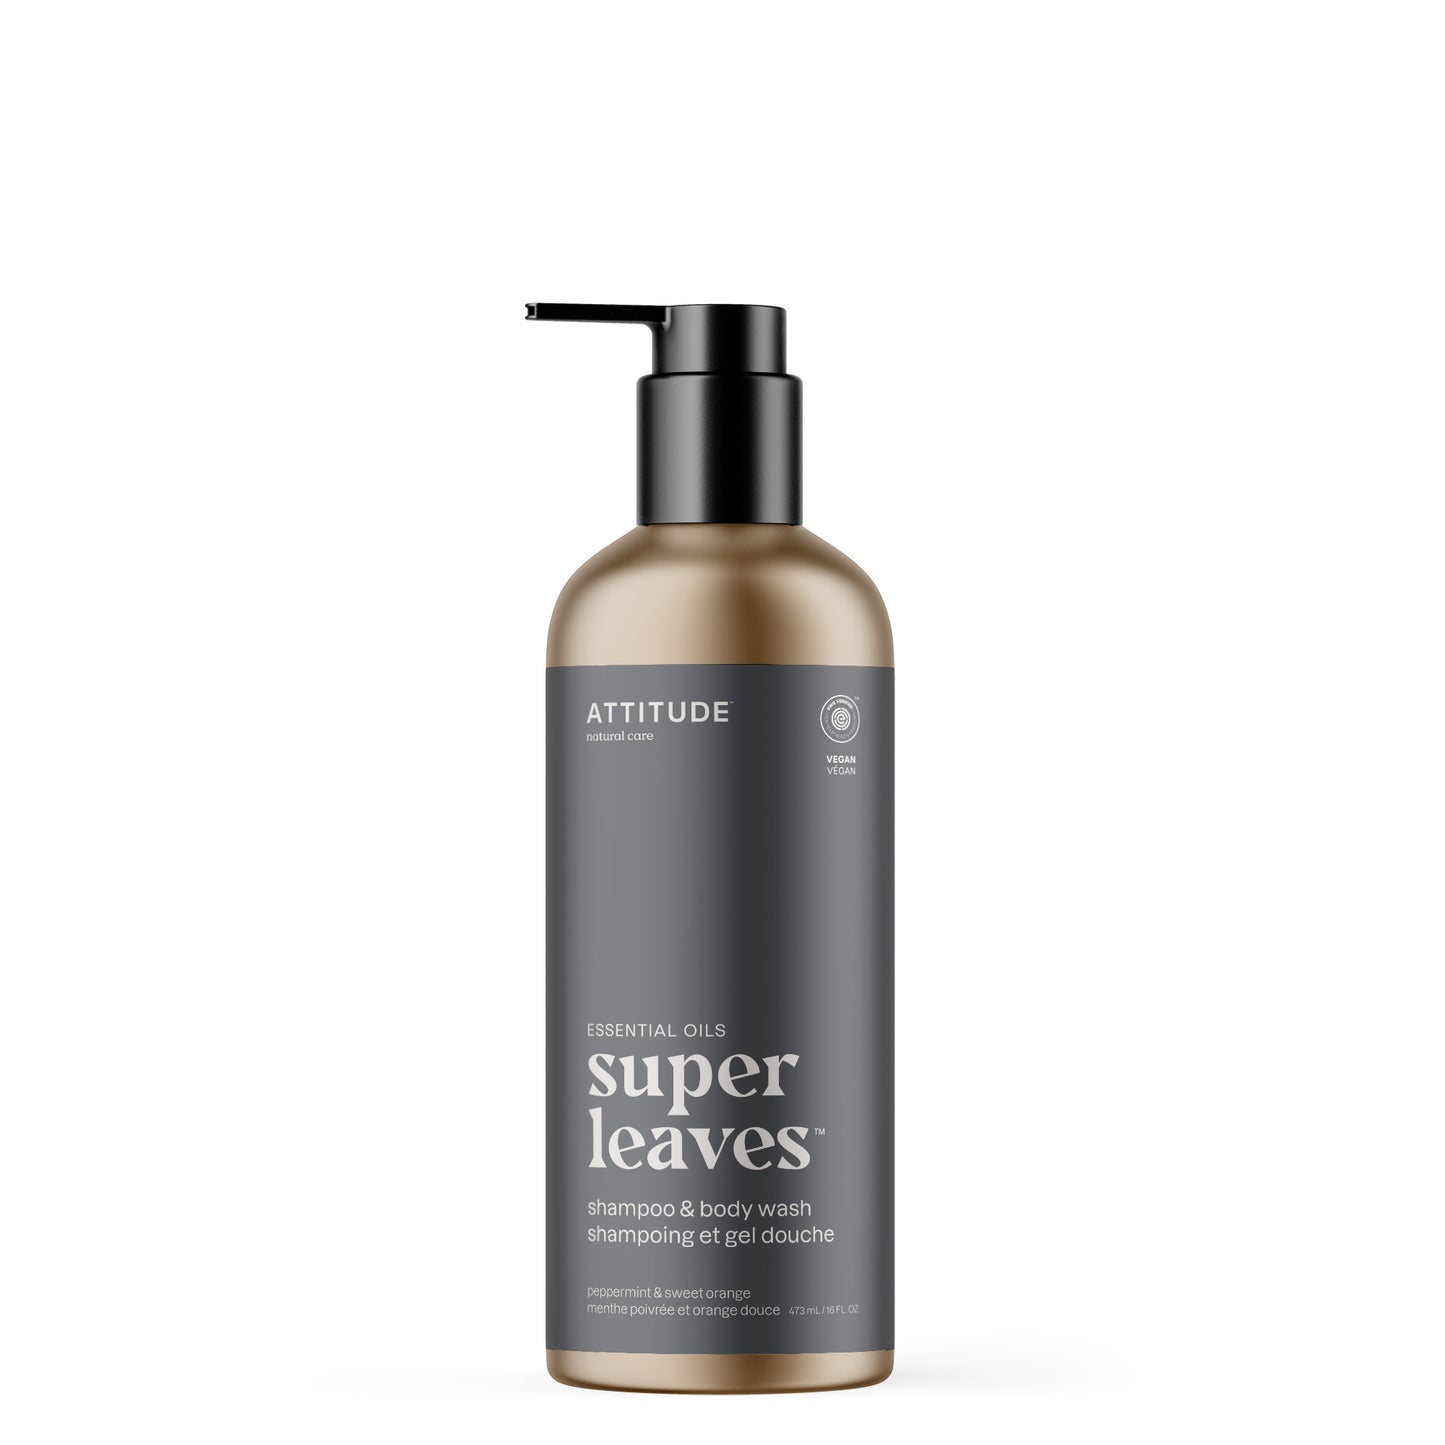 ATTITUDE Super Leaves Essential oil shampoo body wash Peppermint and sweet orange 19004_en?_main? 16 FL. OZ.